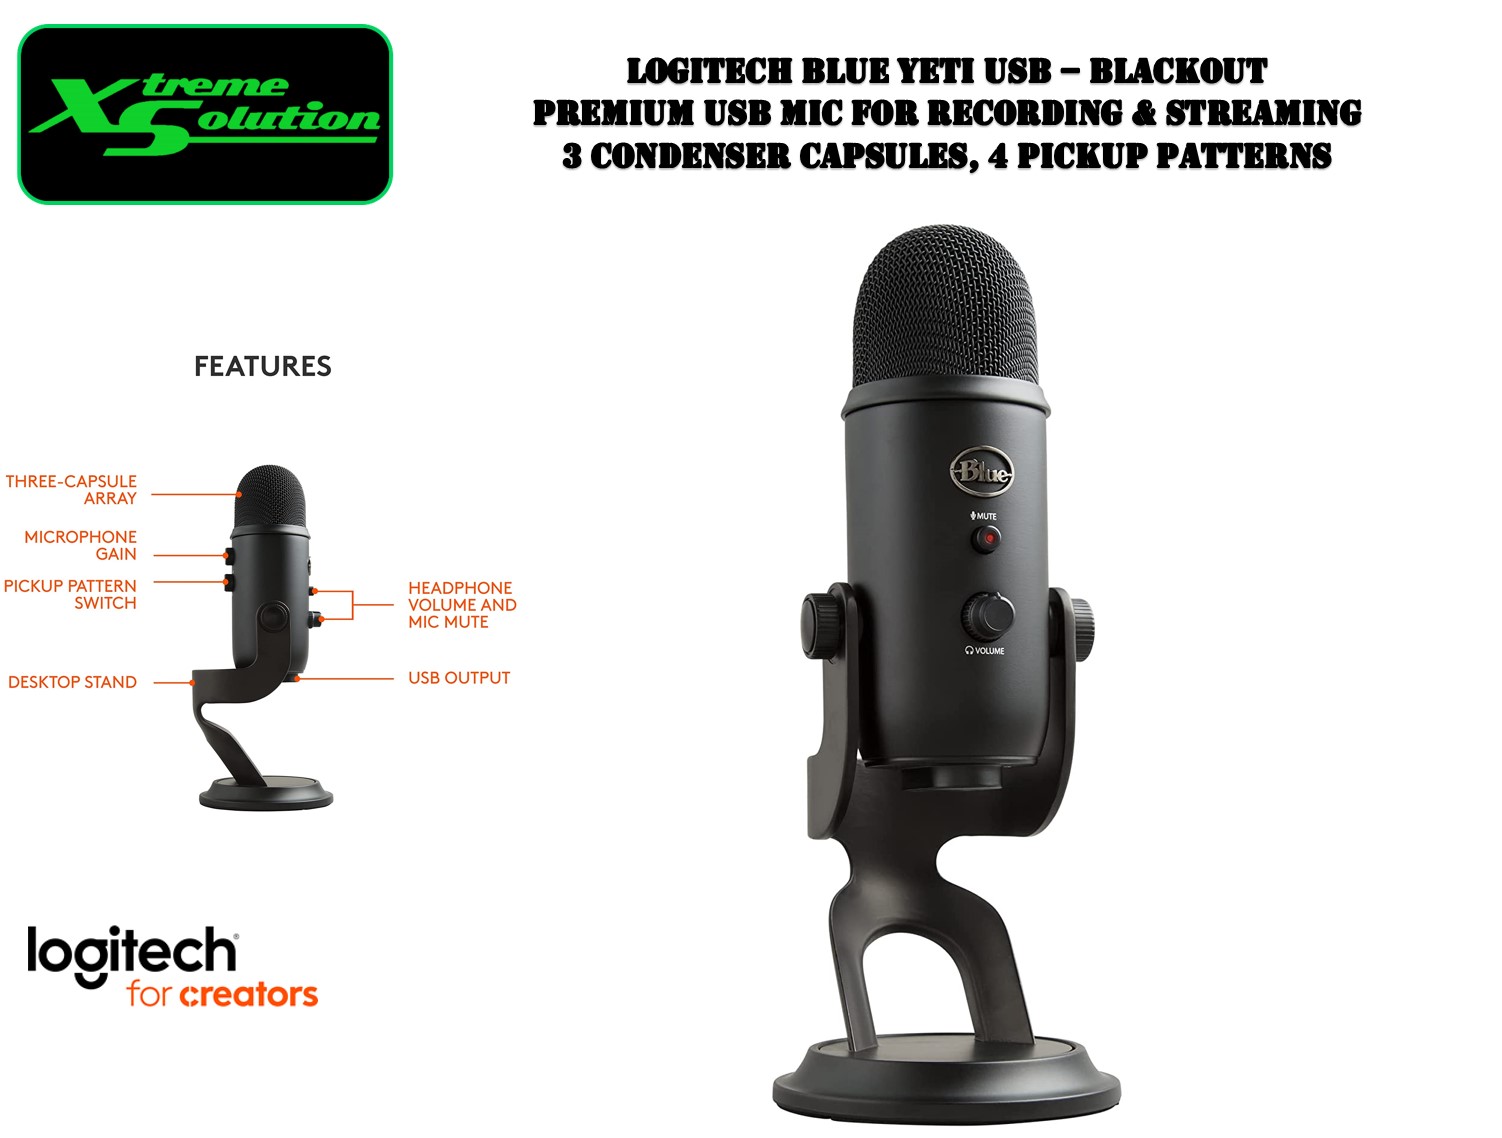 Logitech Blue Yeti Professional Multi-pattern USB Microphone for